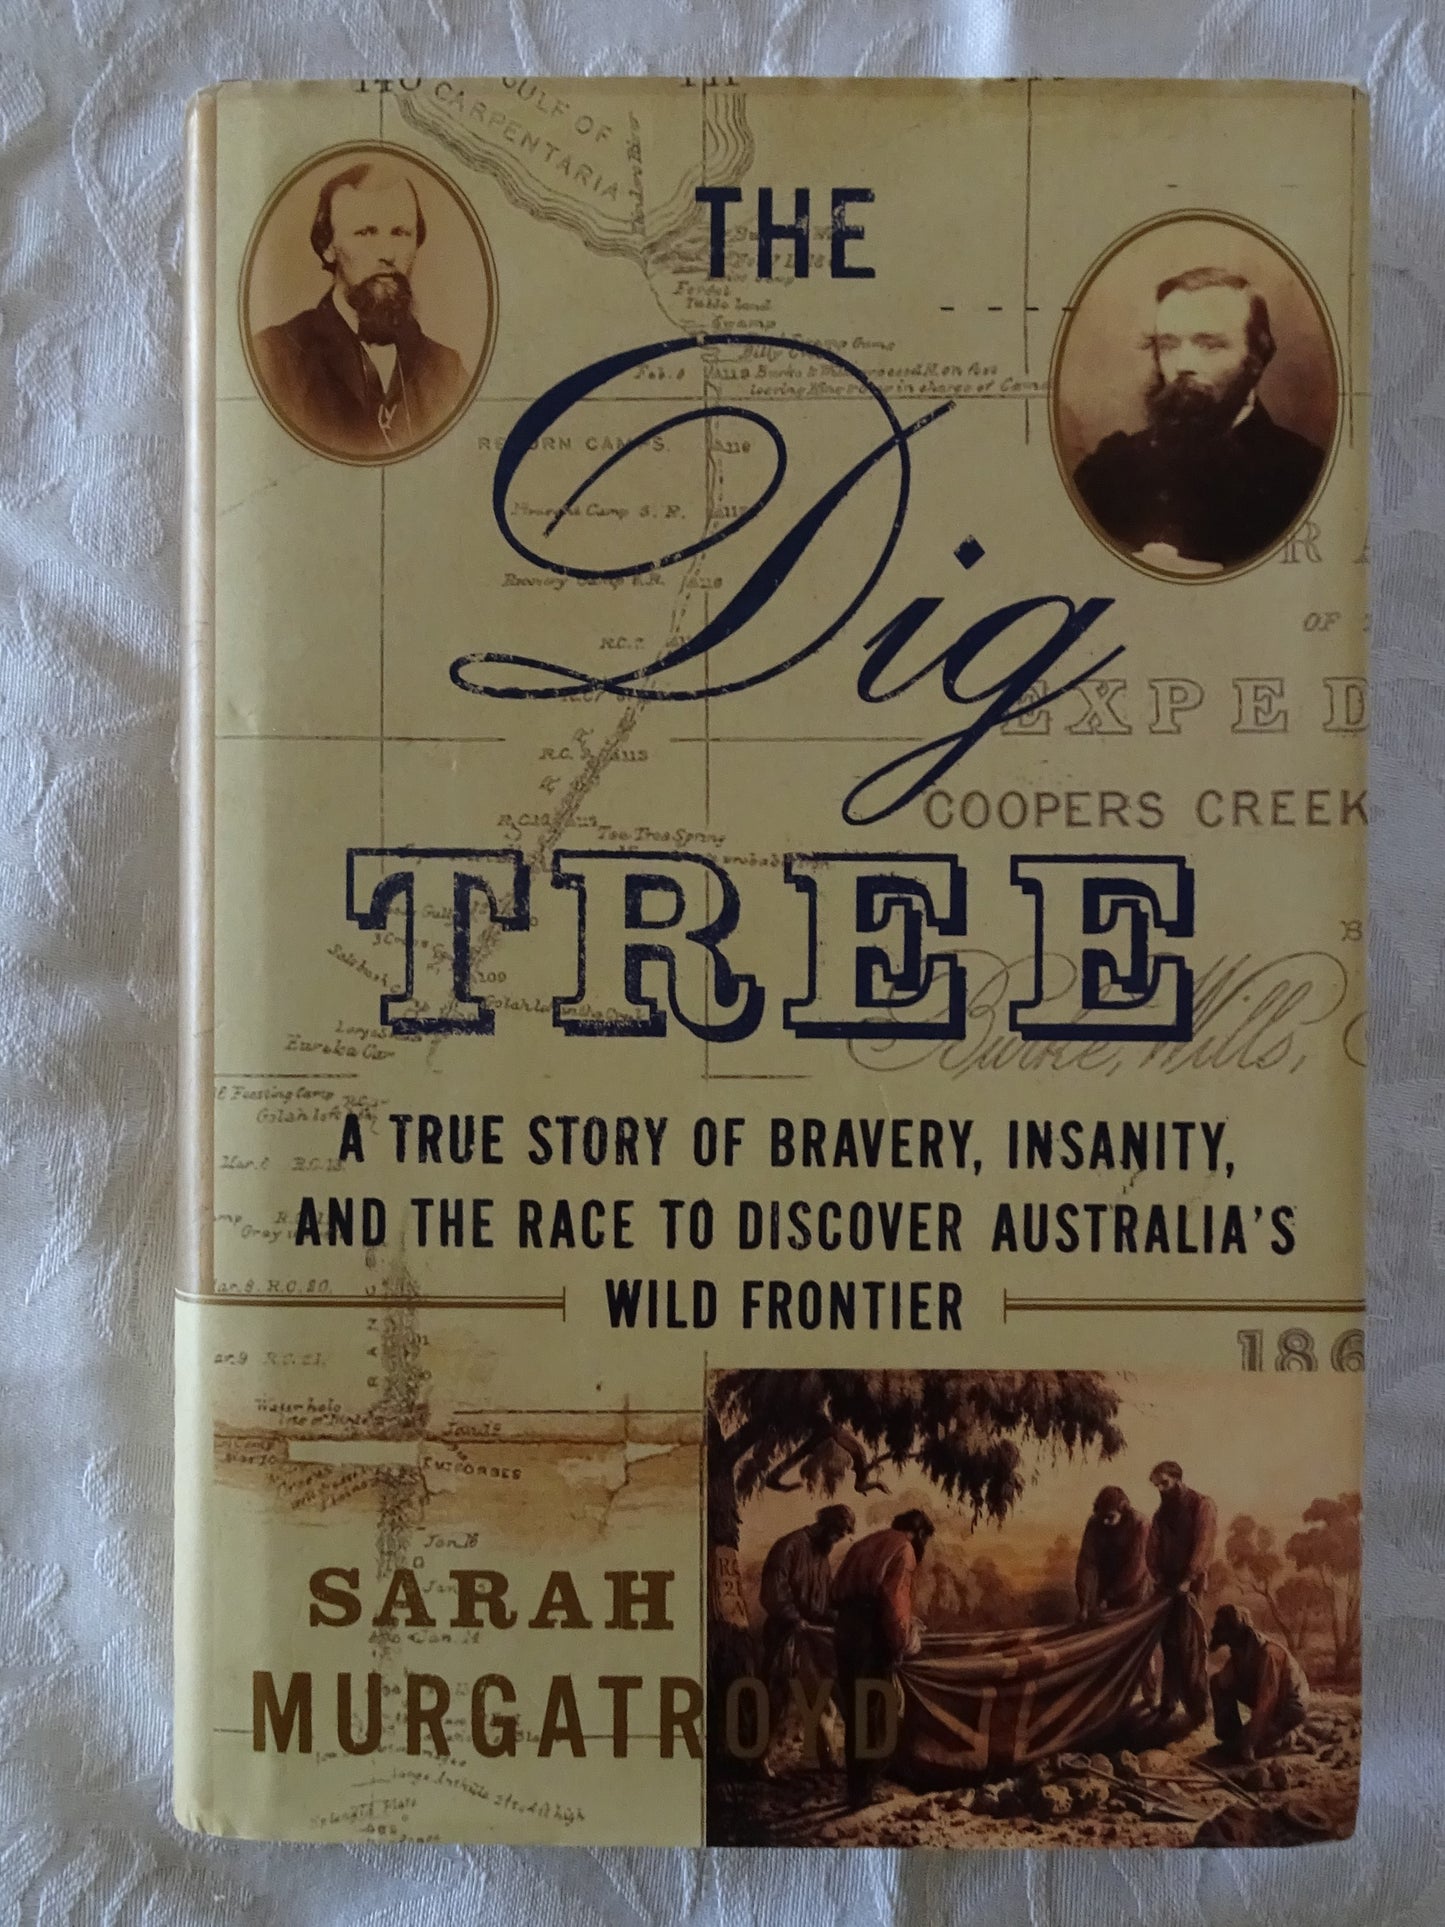 The Dig Tree by Sarah Murgatroyd